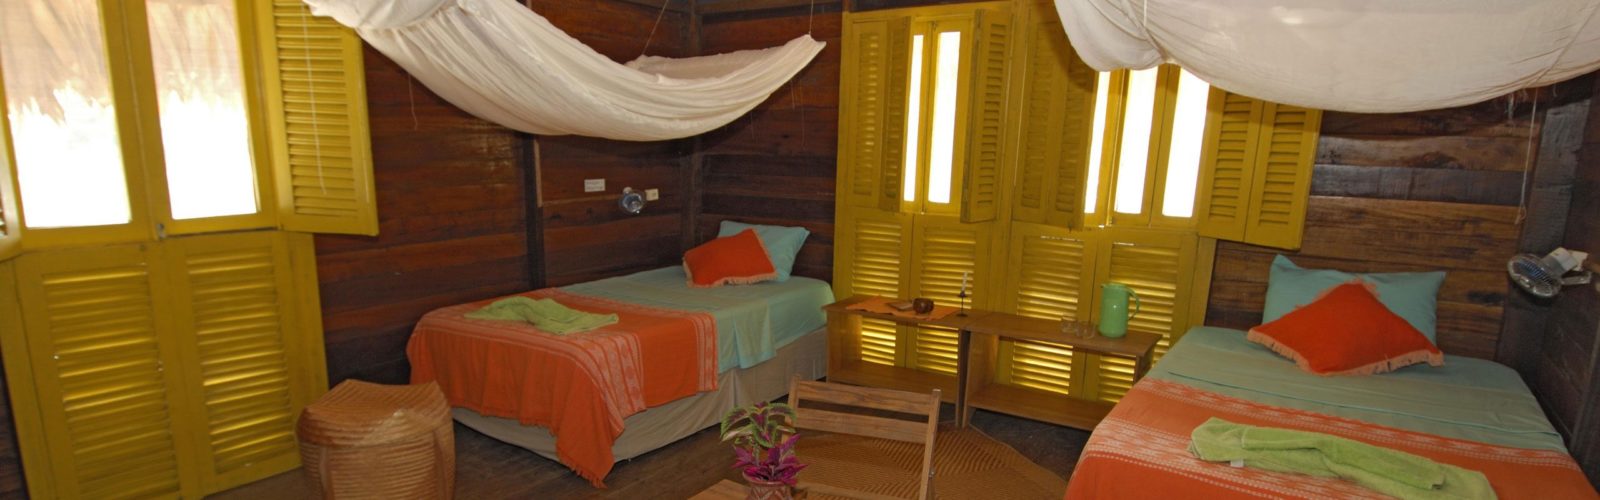 uacari-lodge-bedroom-brazil